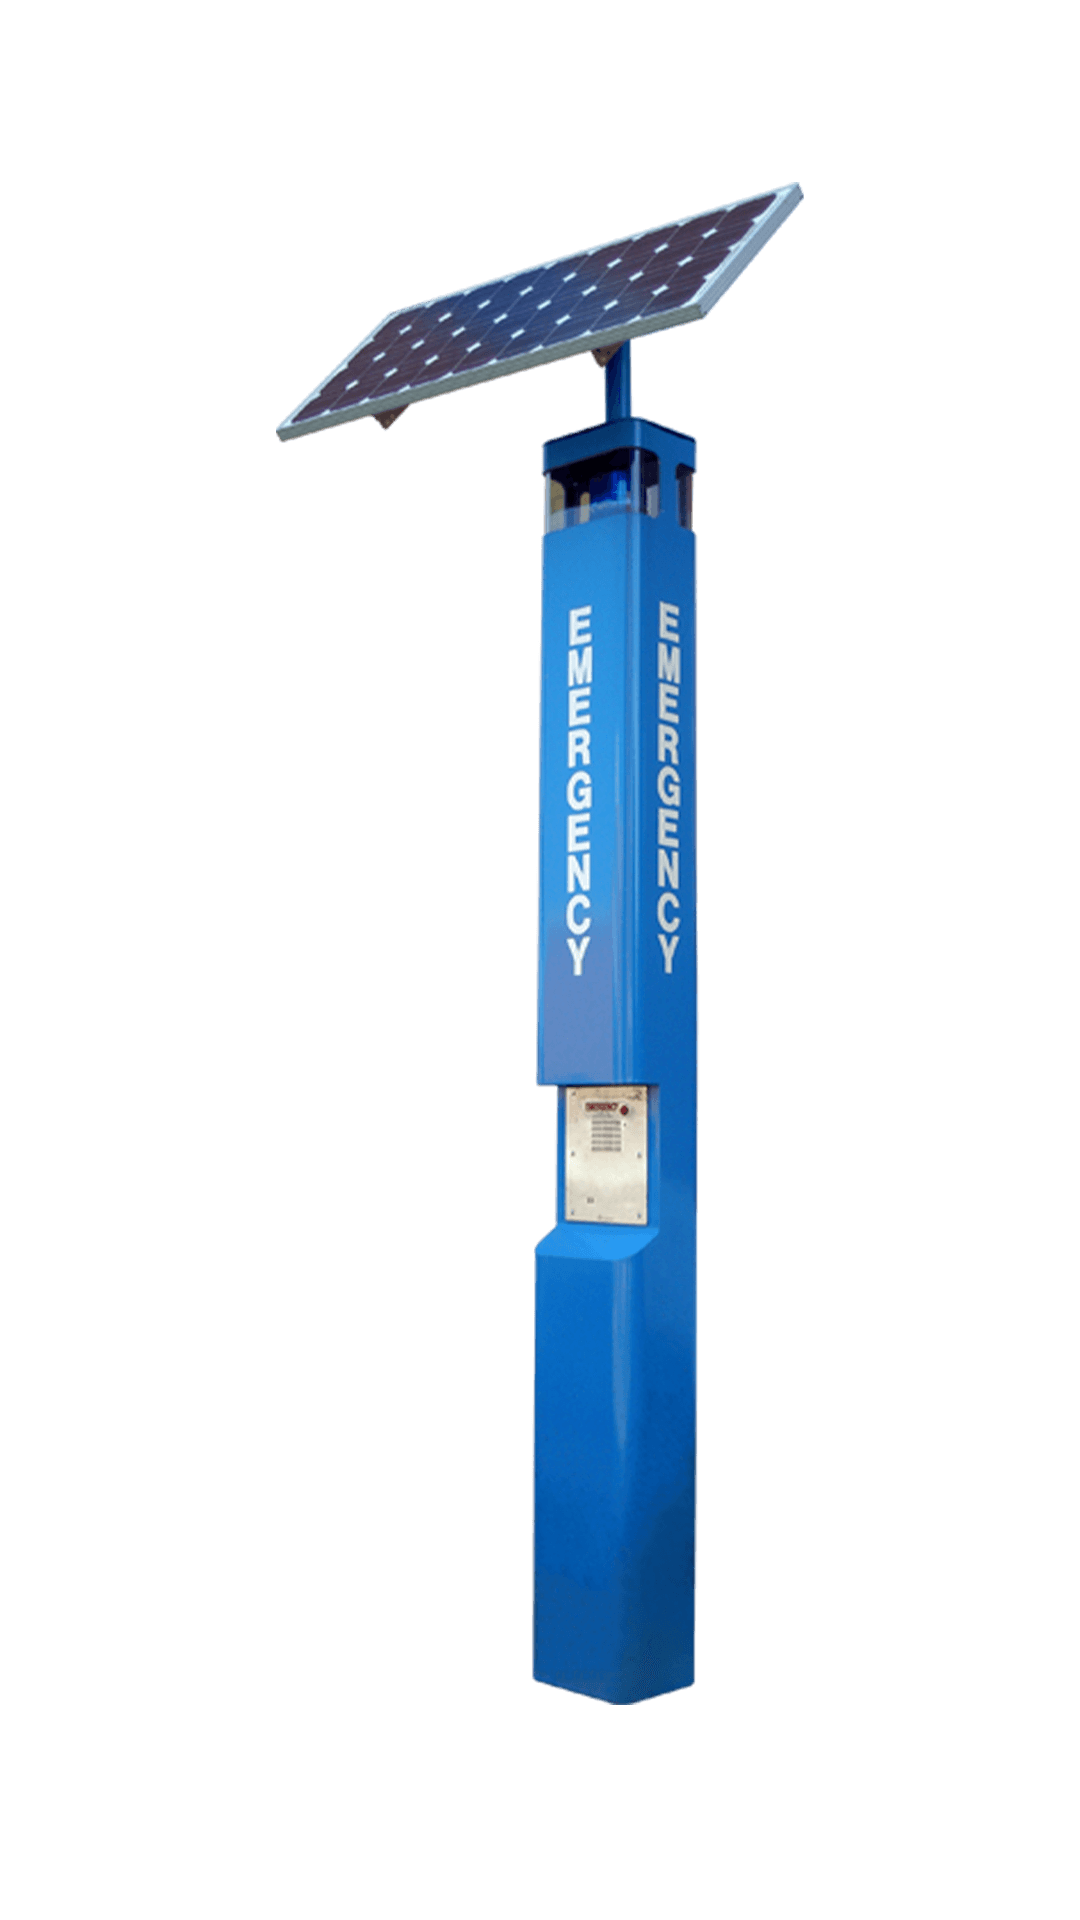 Radius Blue Light Call Station Tower, Wireless/Solar Ready